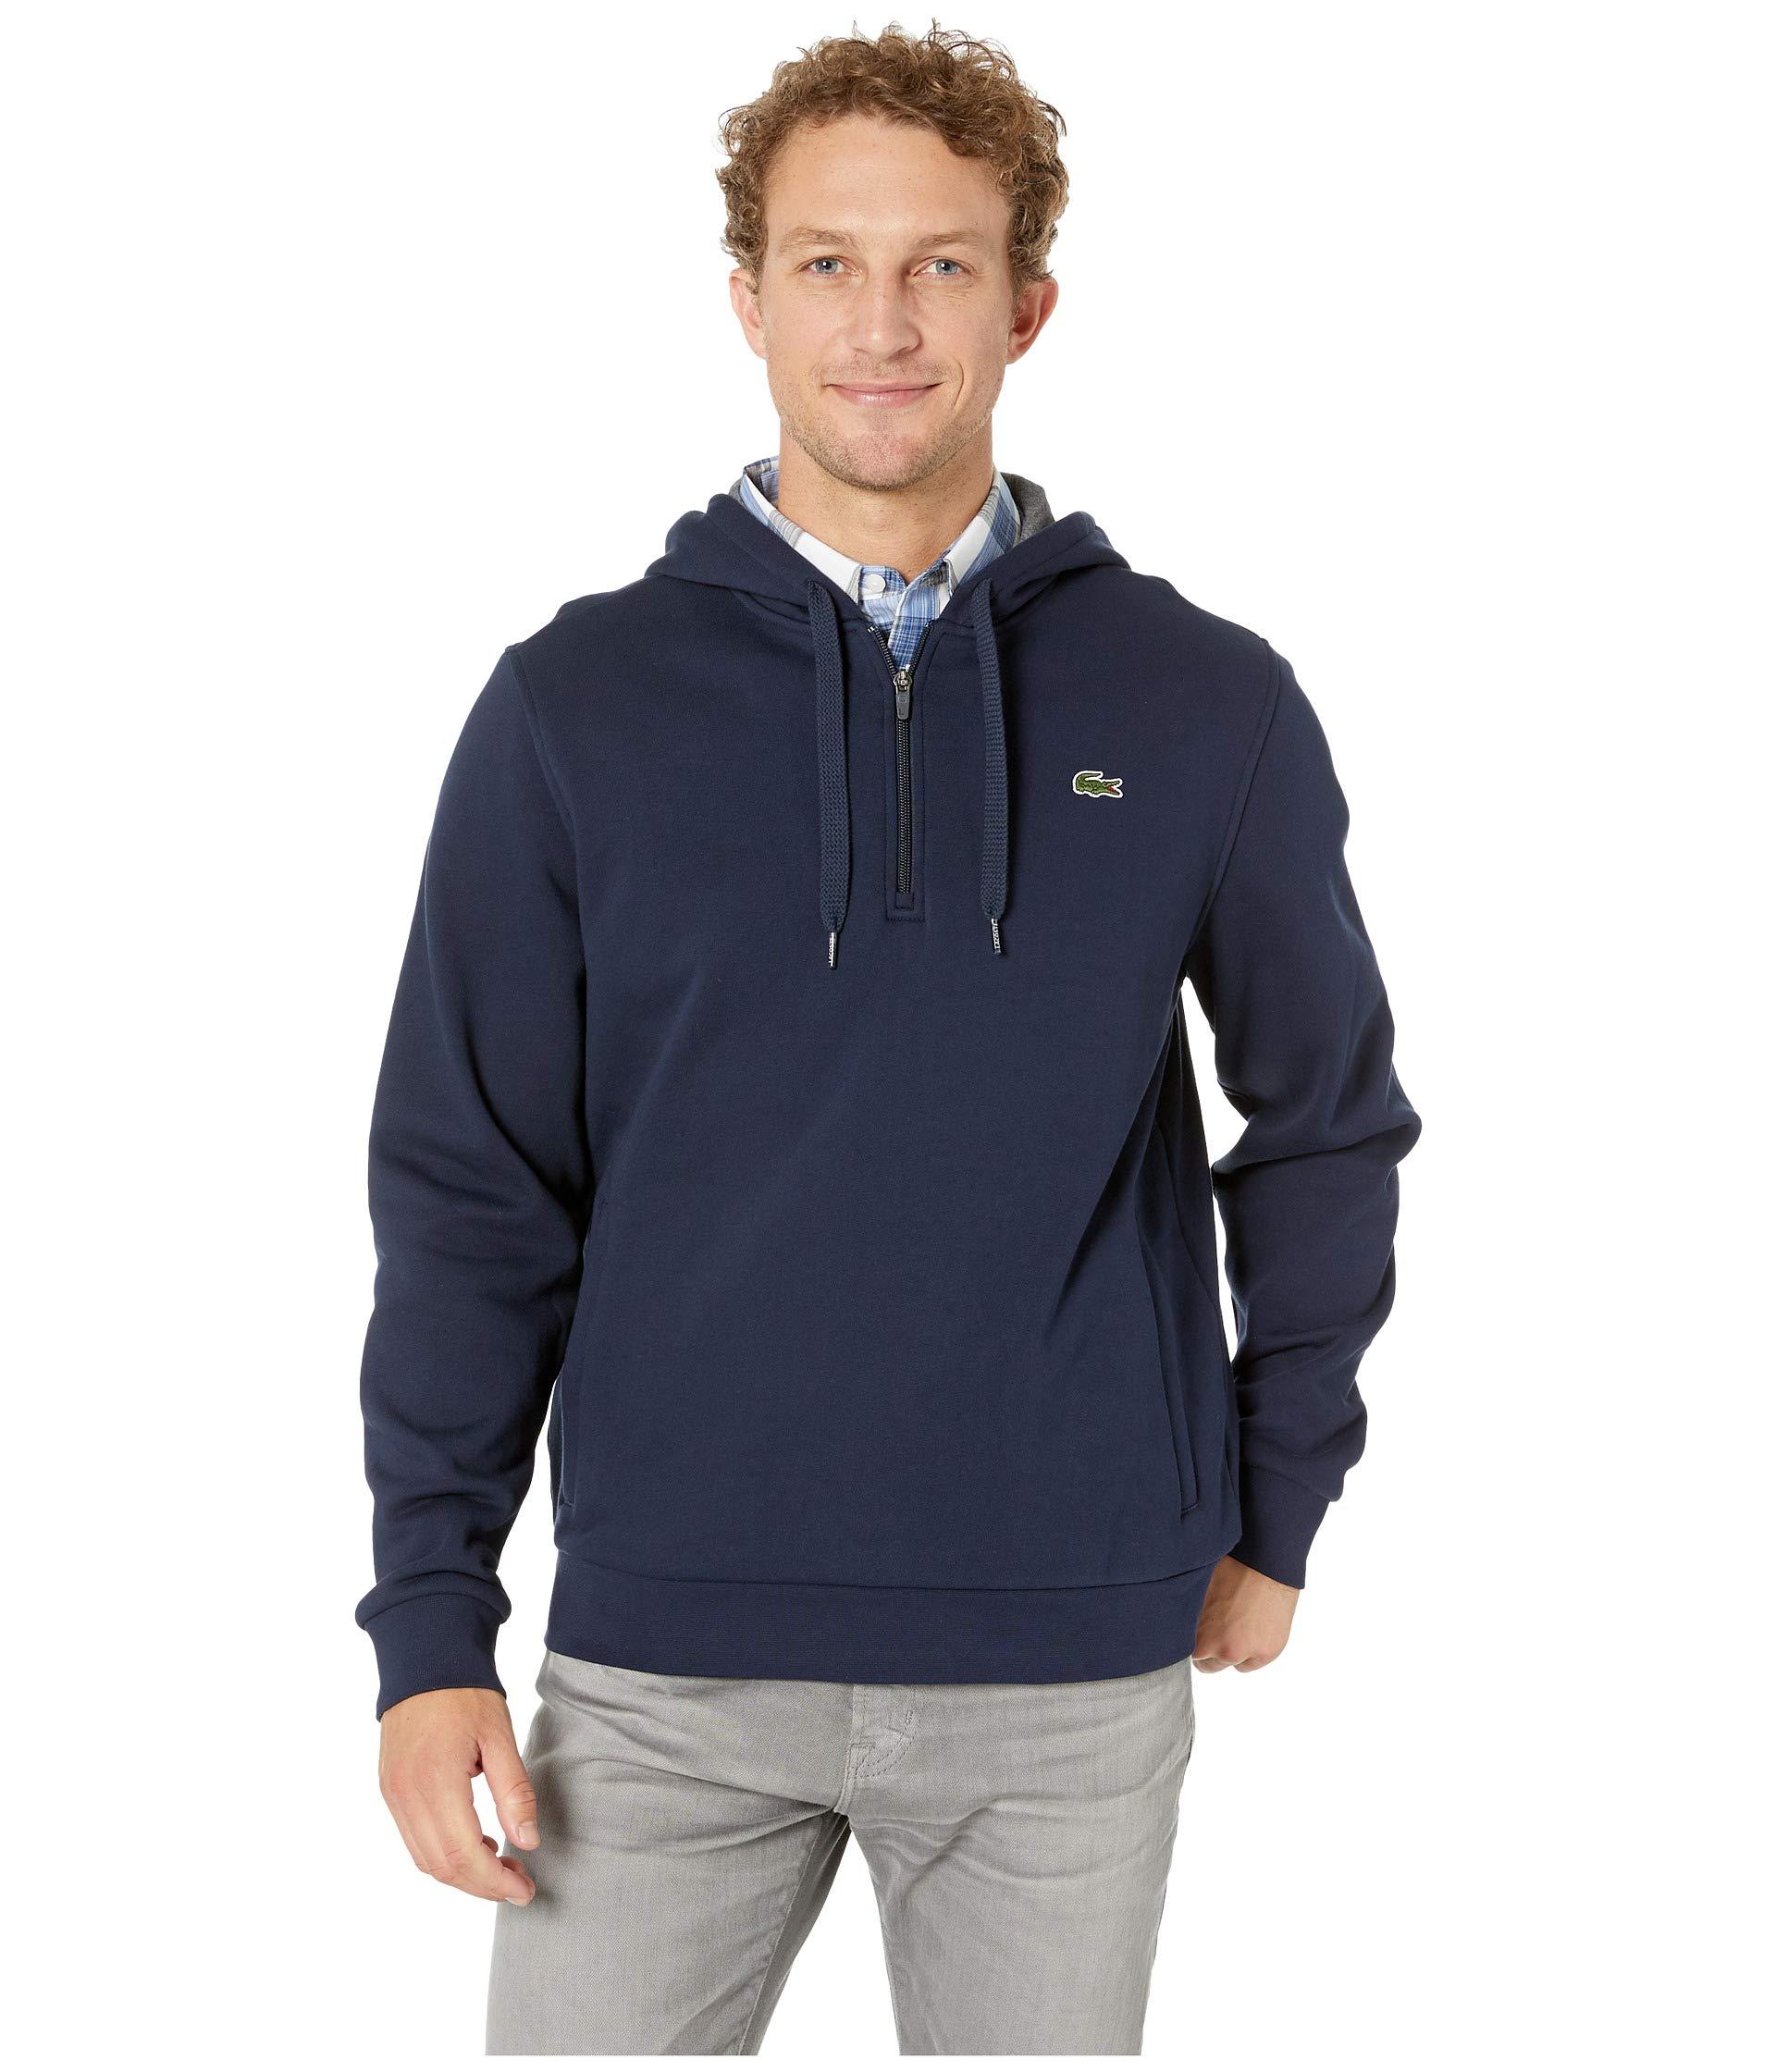 Lyst - Lacoste Sport Long Sleeve Half Zip Fleece Hoodie in Blue for Men